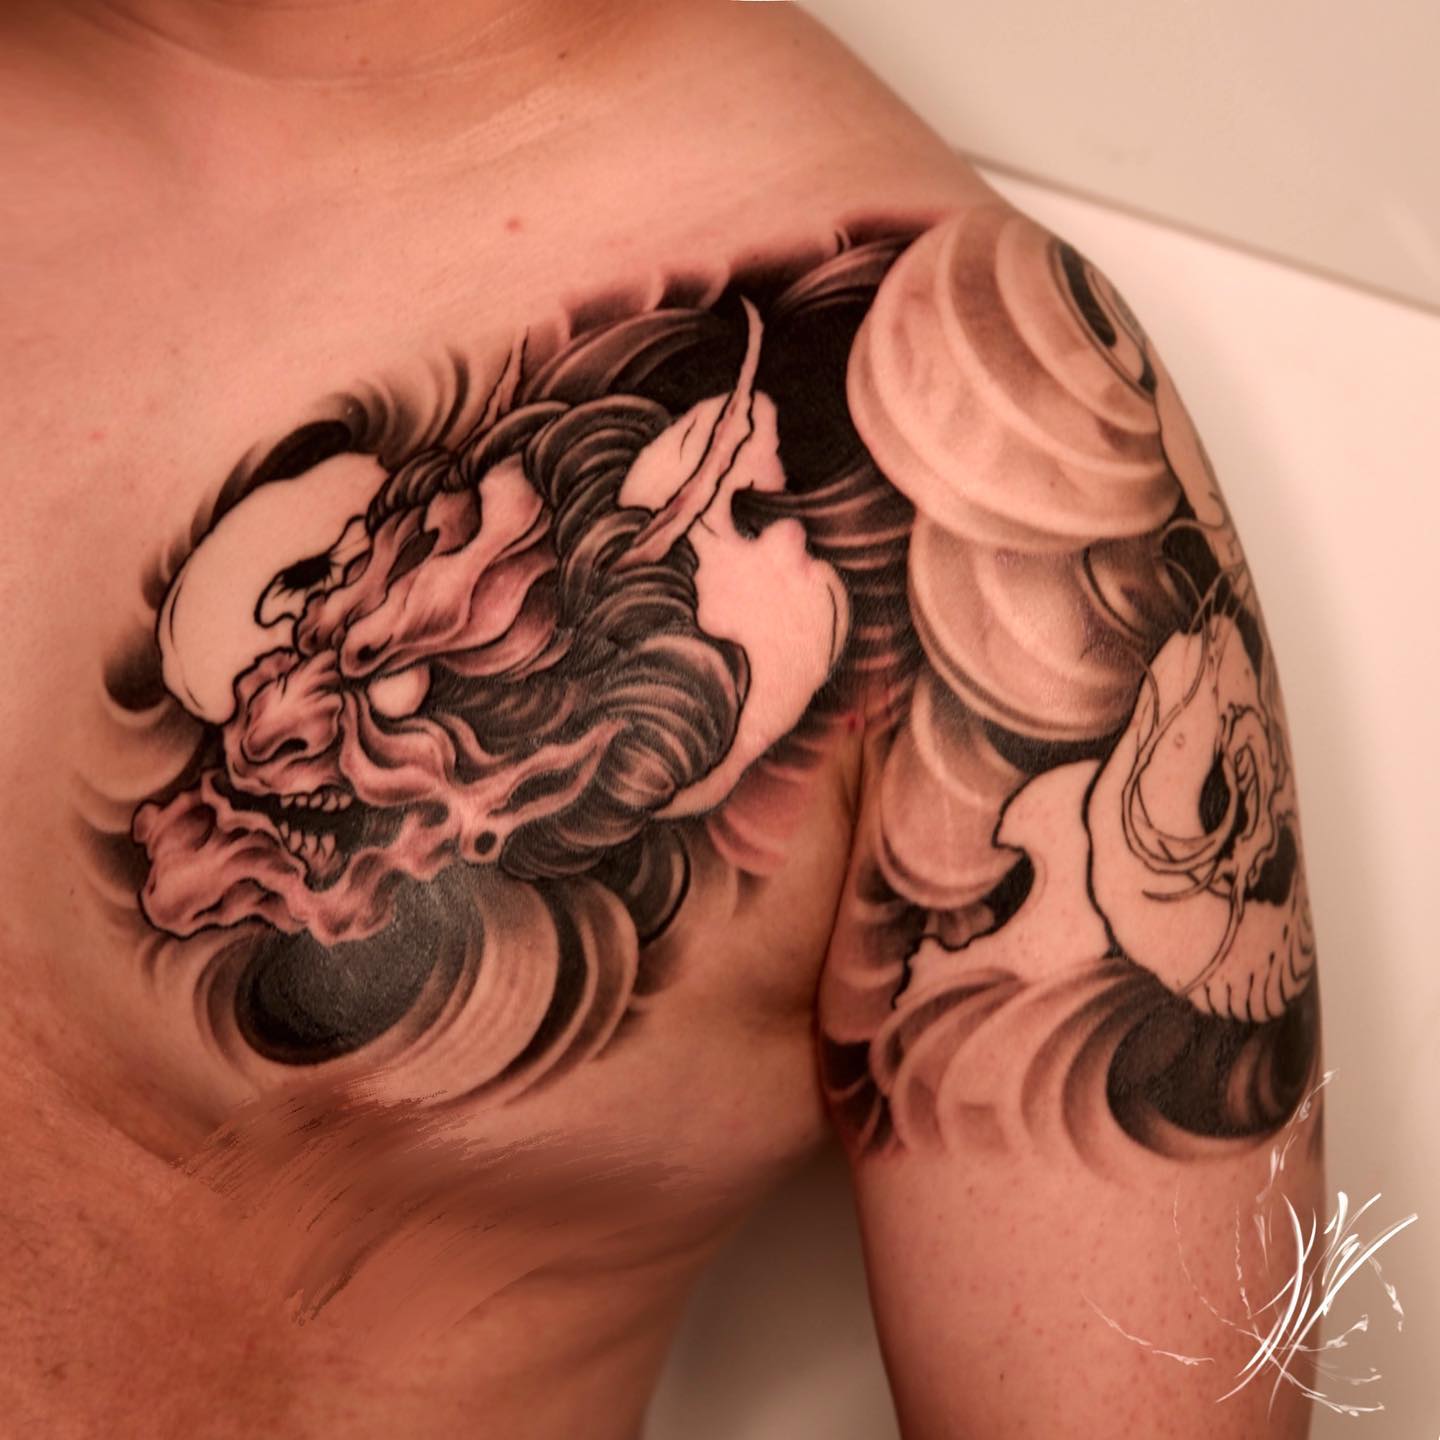 Tatuaje de hombro de dragón aterrador.